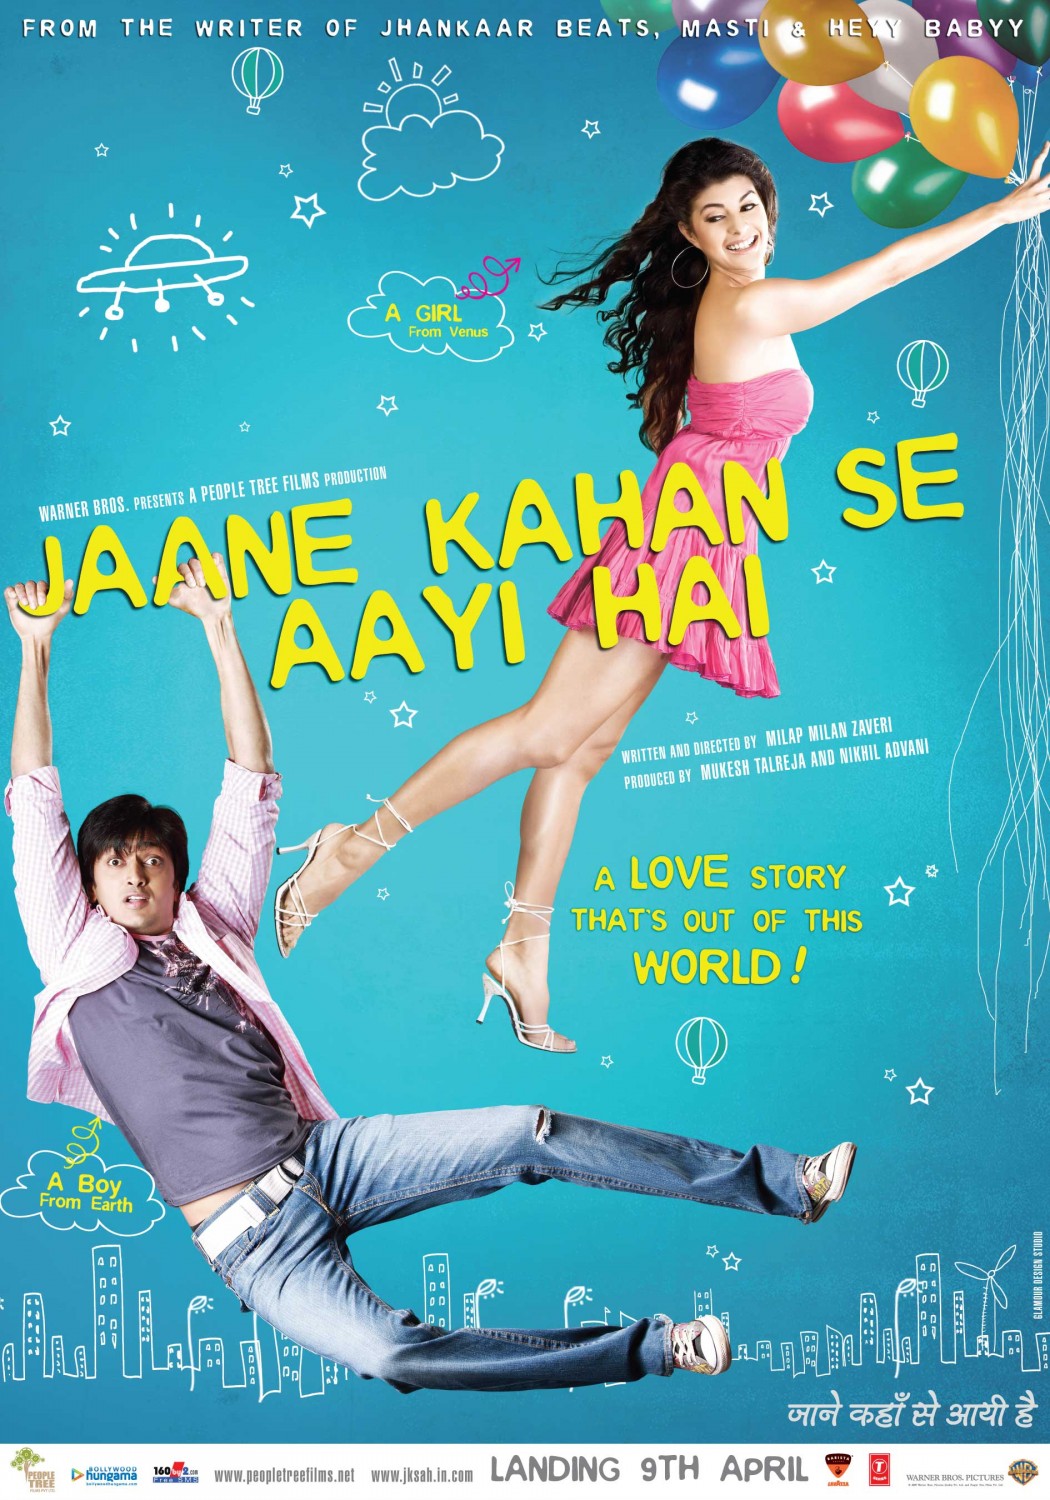 Extra Large Movie Poster Image for Jaane Kahan Se Aayi Hai (#3 of 5)